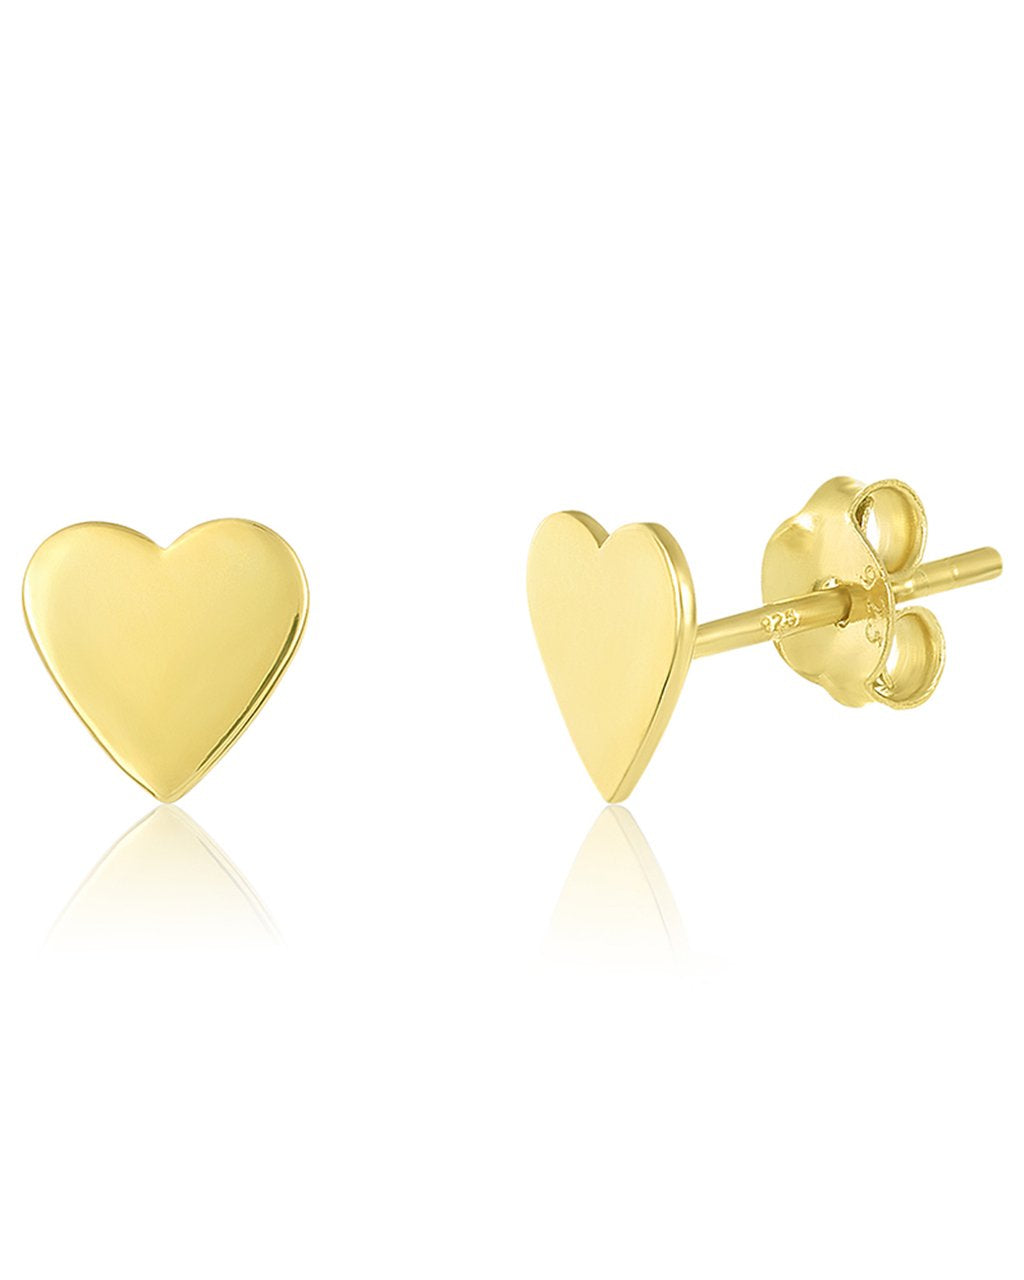 Sterling Silver Heart & Infinity Earring Set of 3 - Sterling Forever